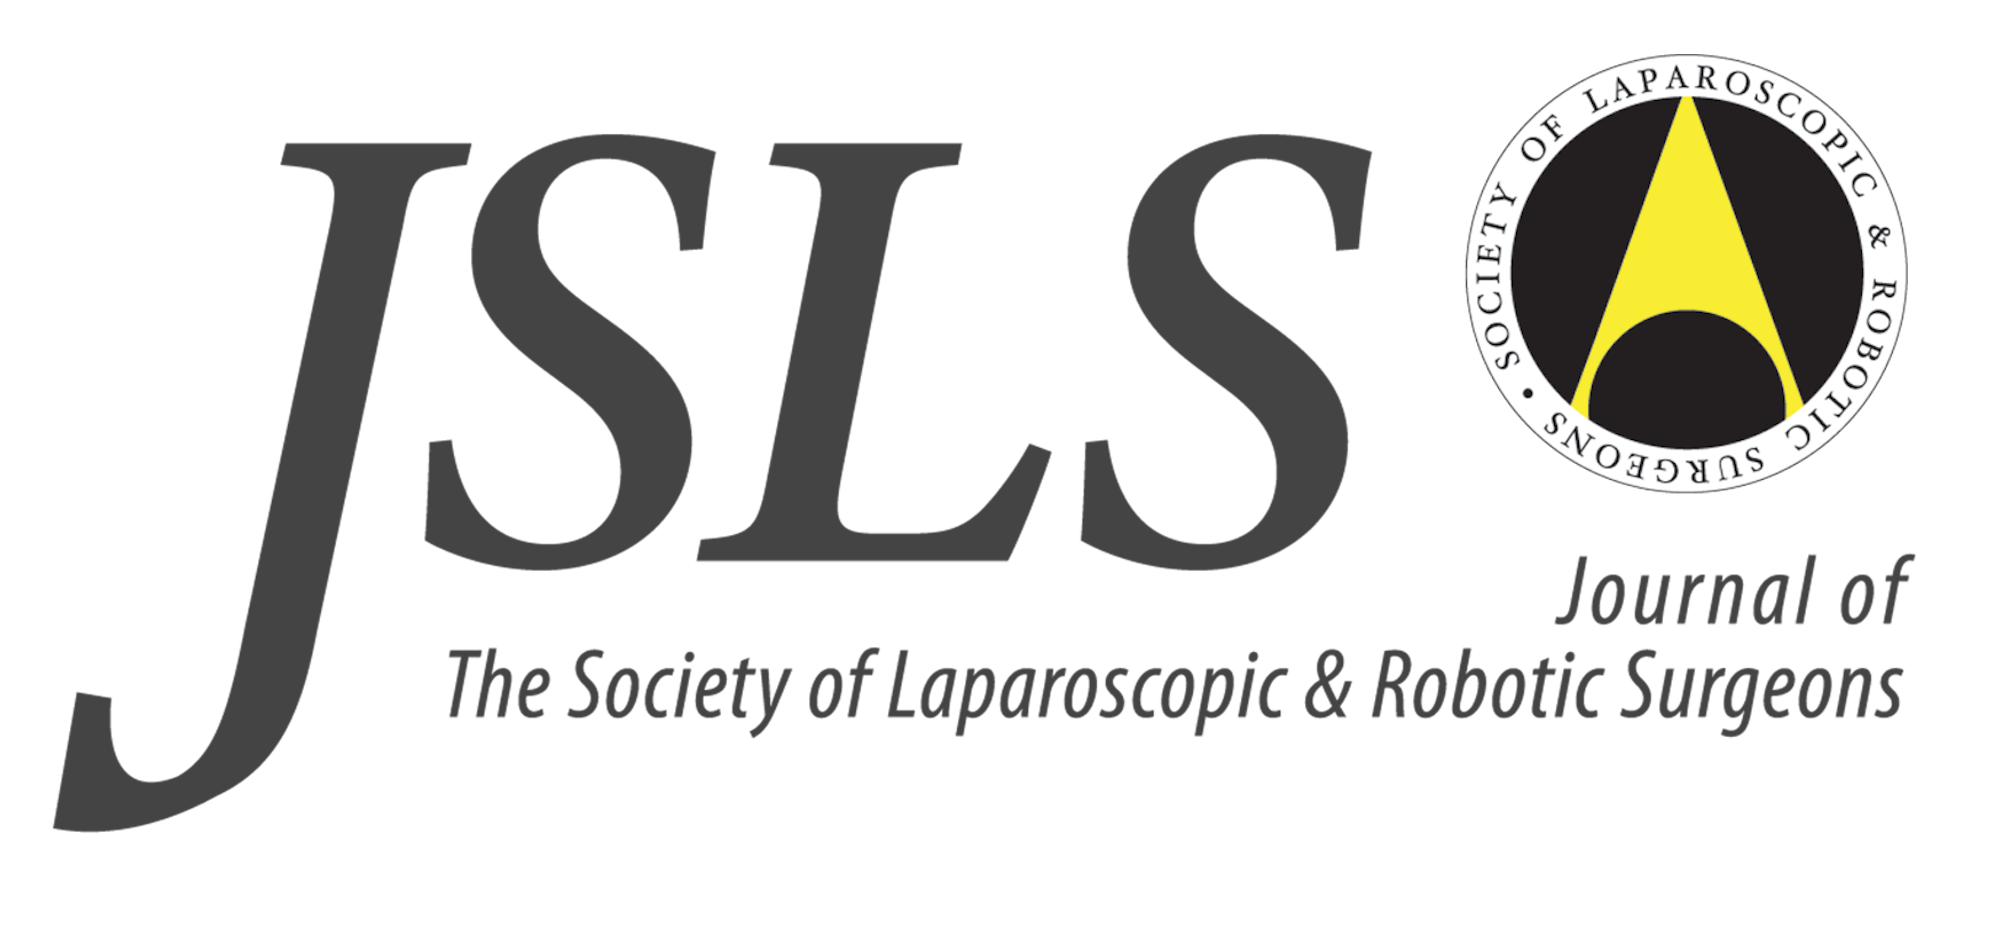 Jsls logo web